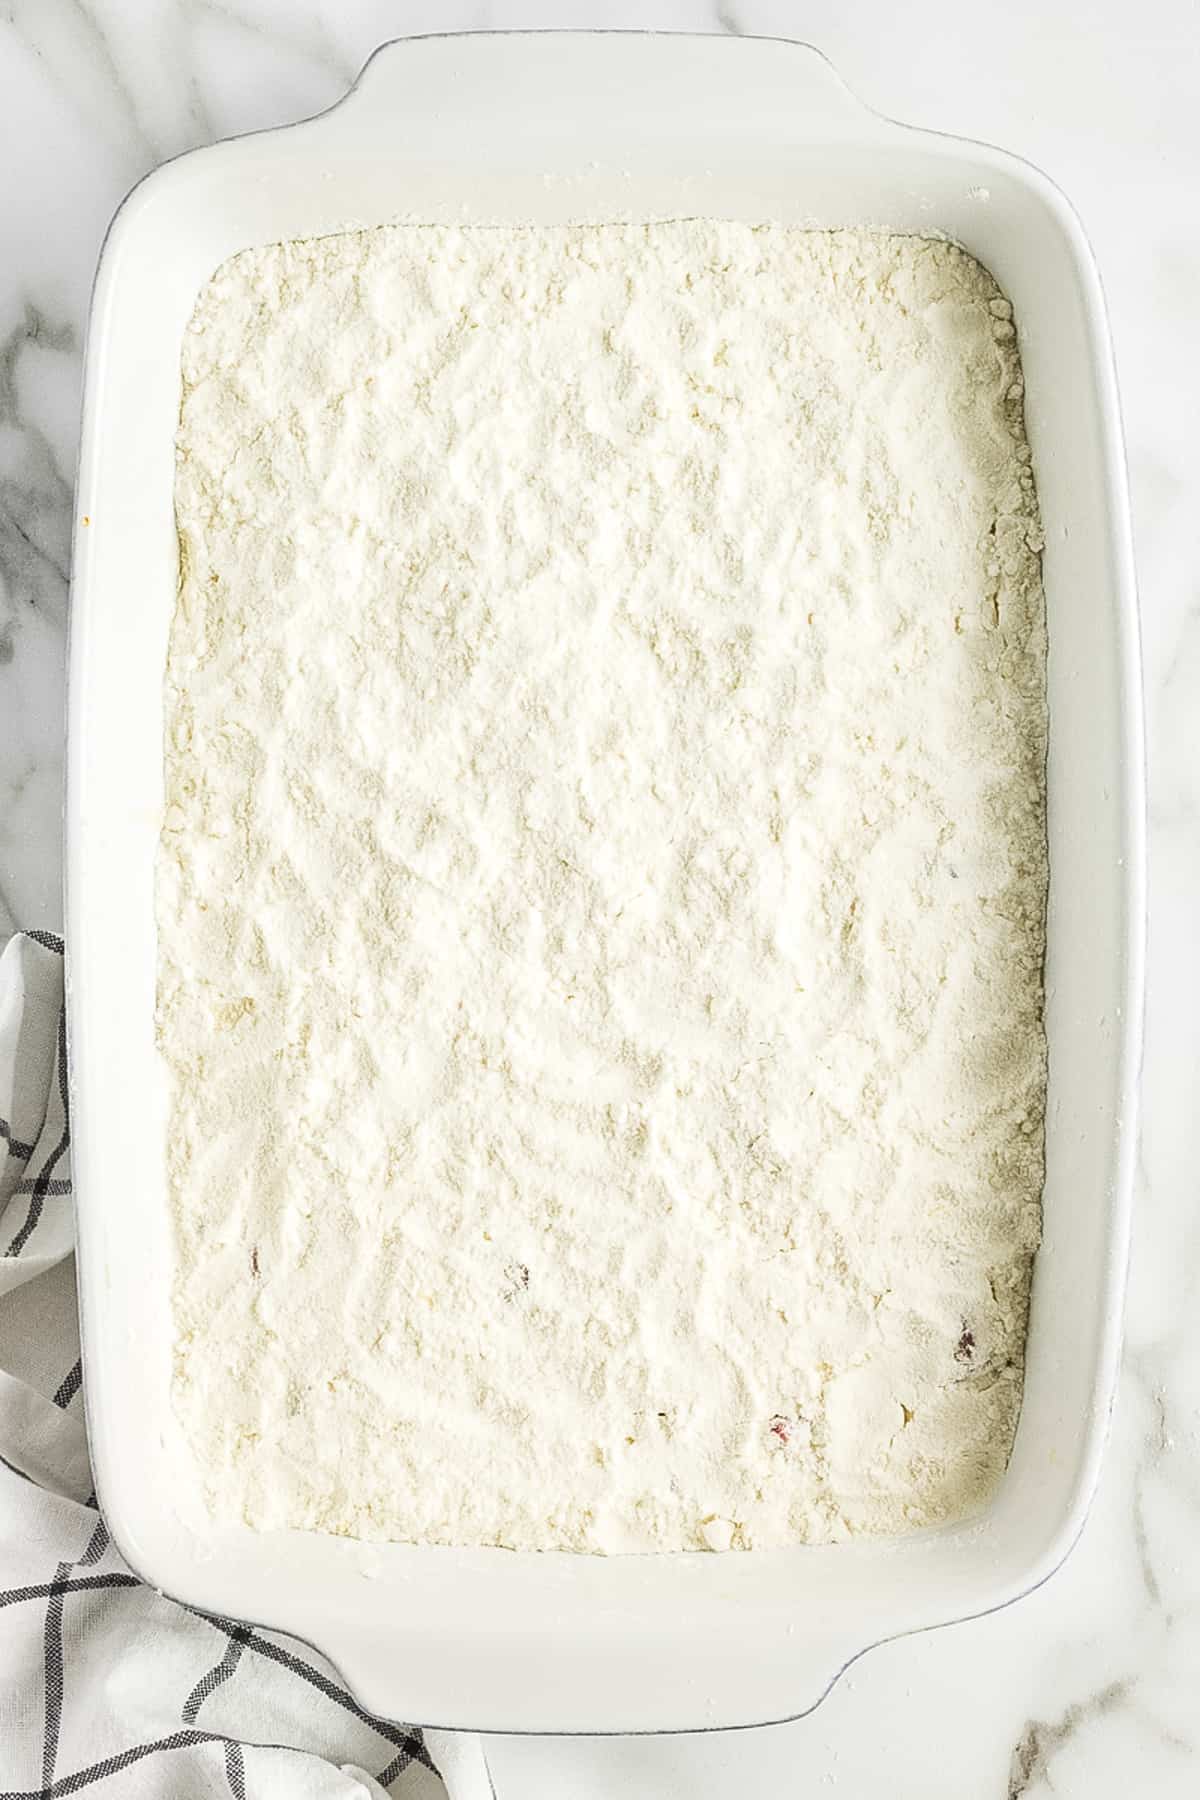 White baking dish with dry cake mix